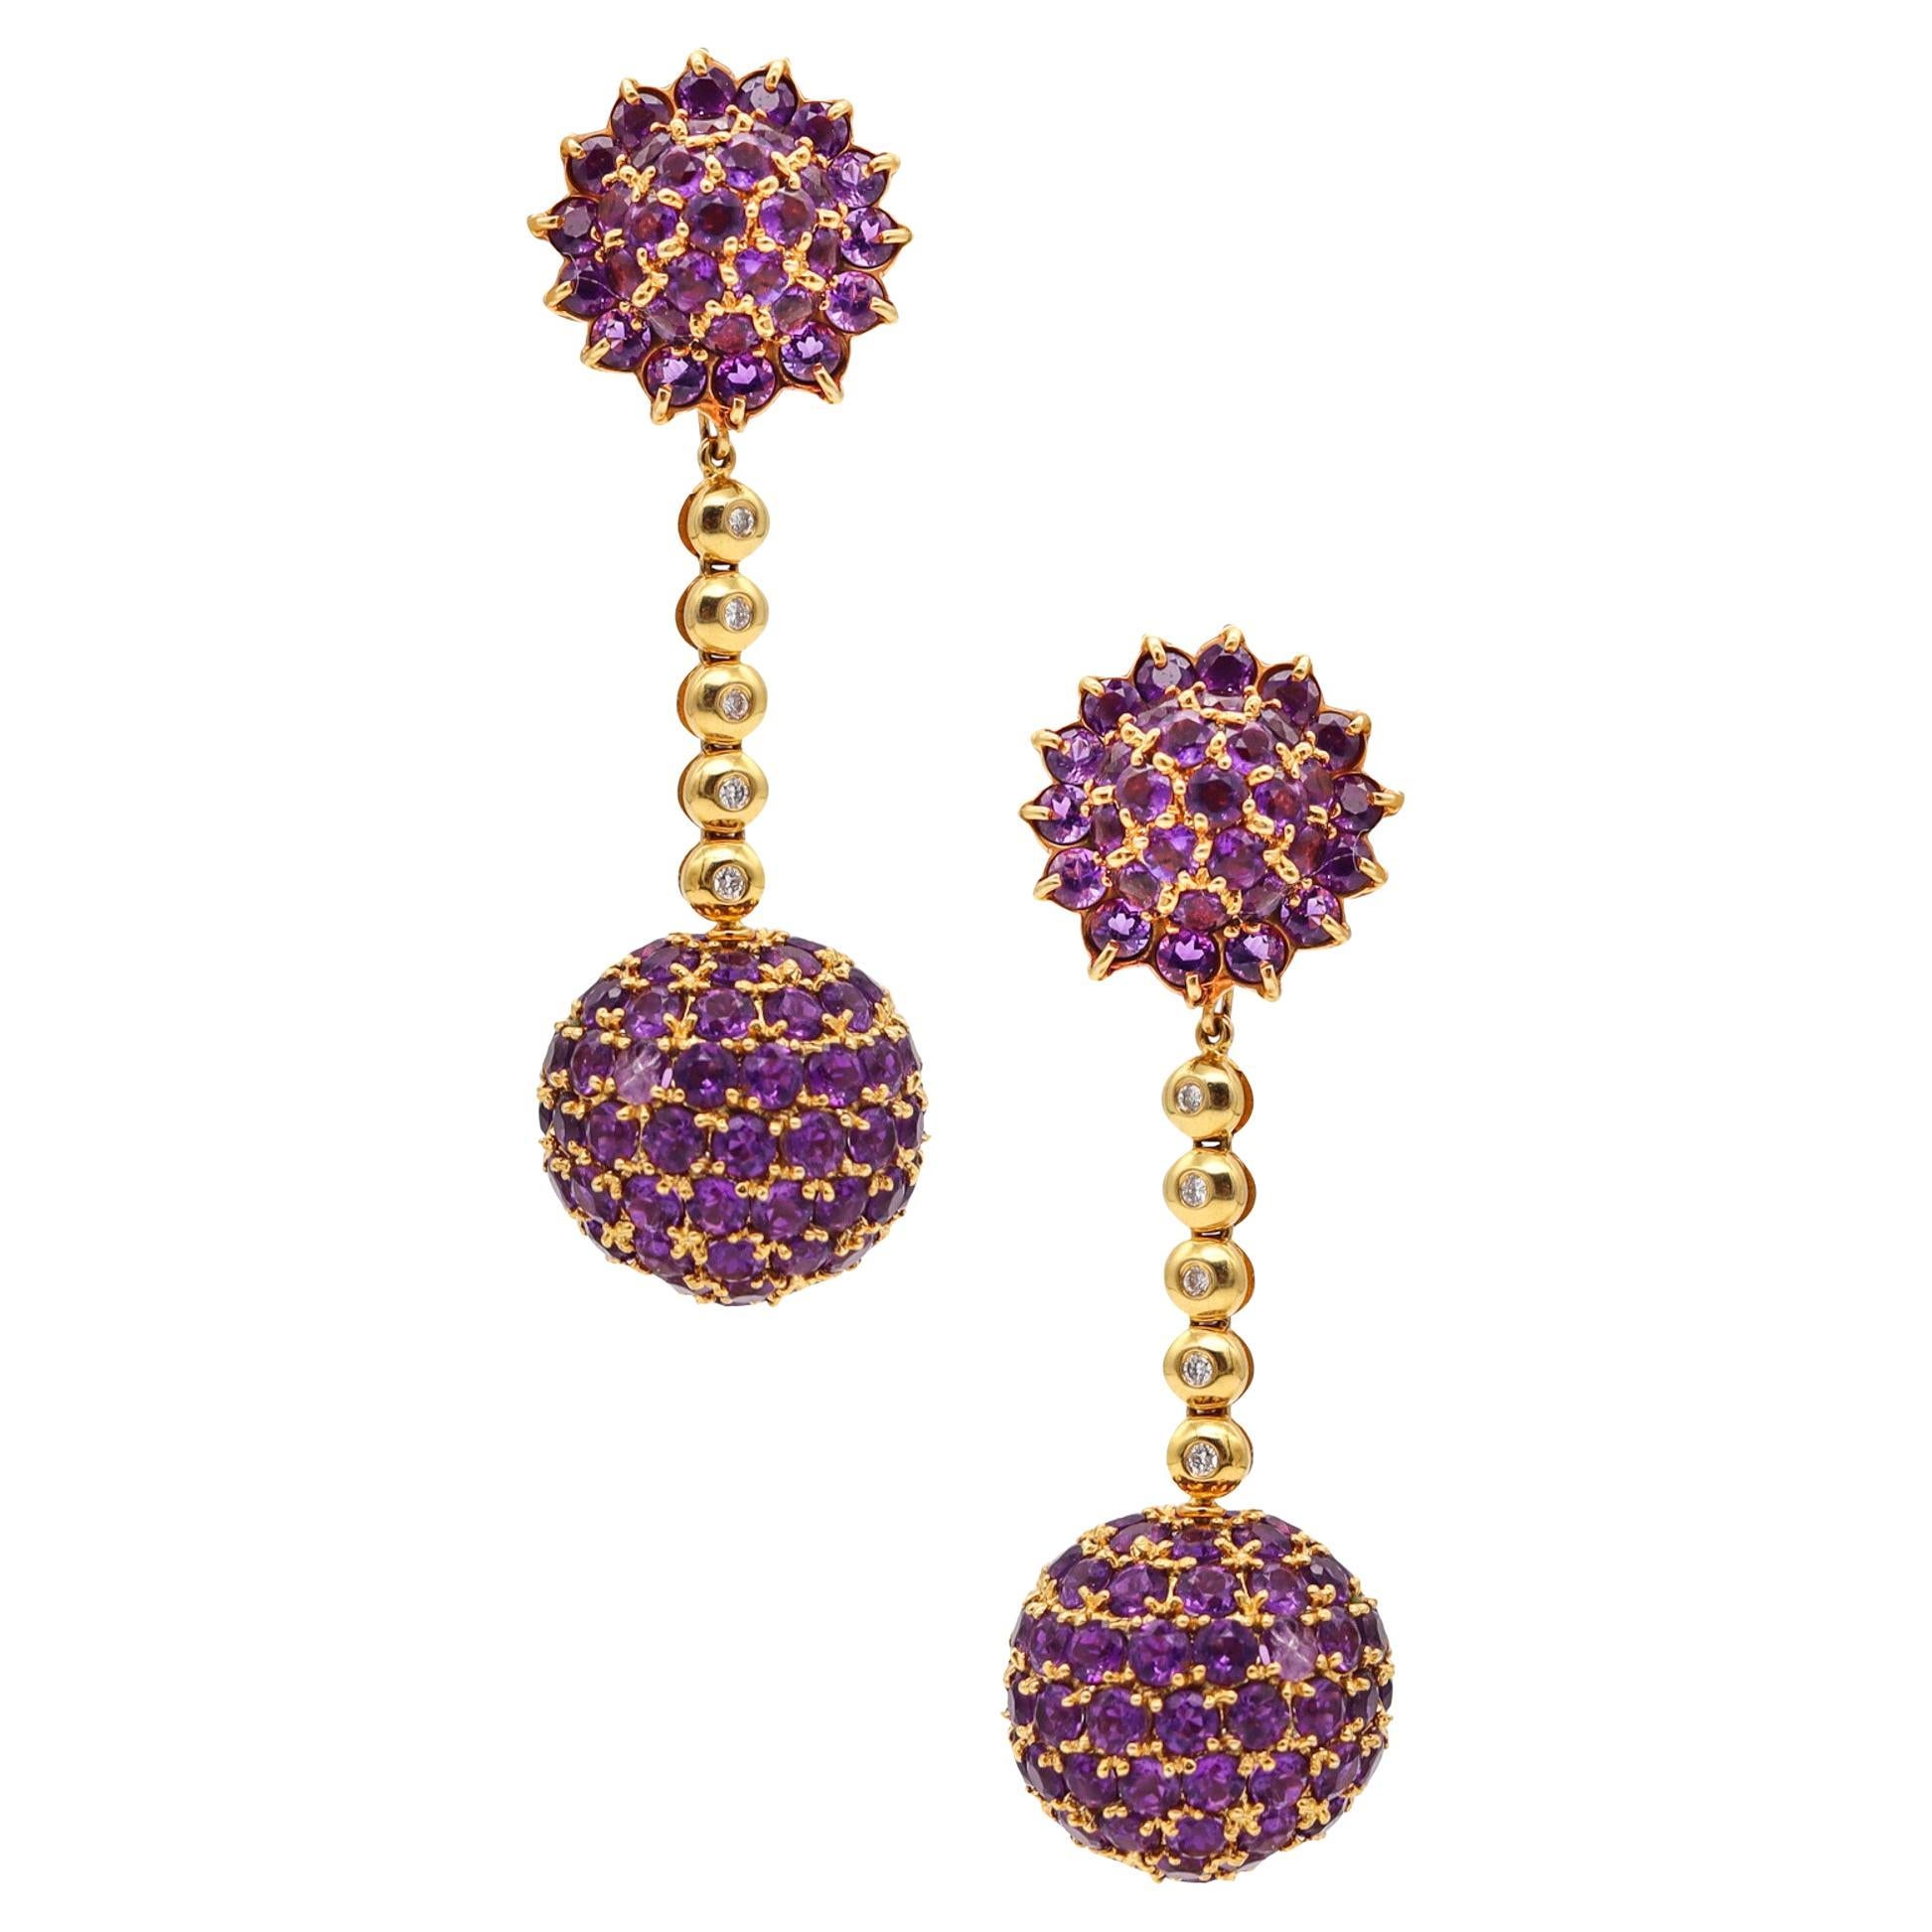 Boucles d'oreilles pendantes convertibles Salavetti en or 18 carats avec améthyste de 24,35 carats